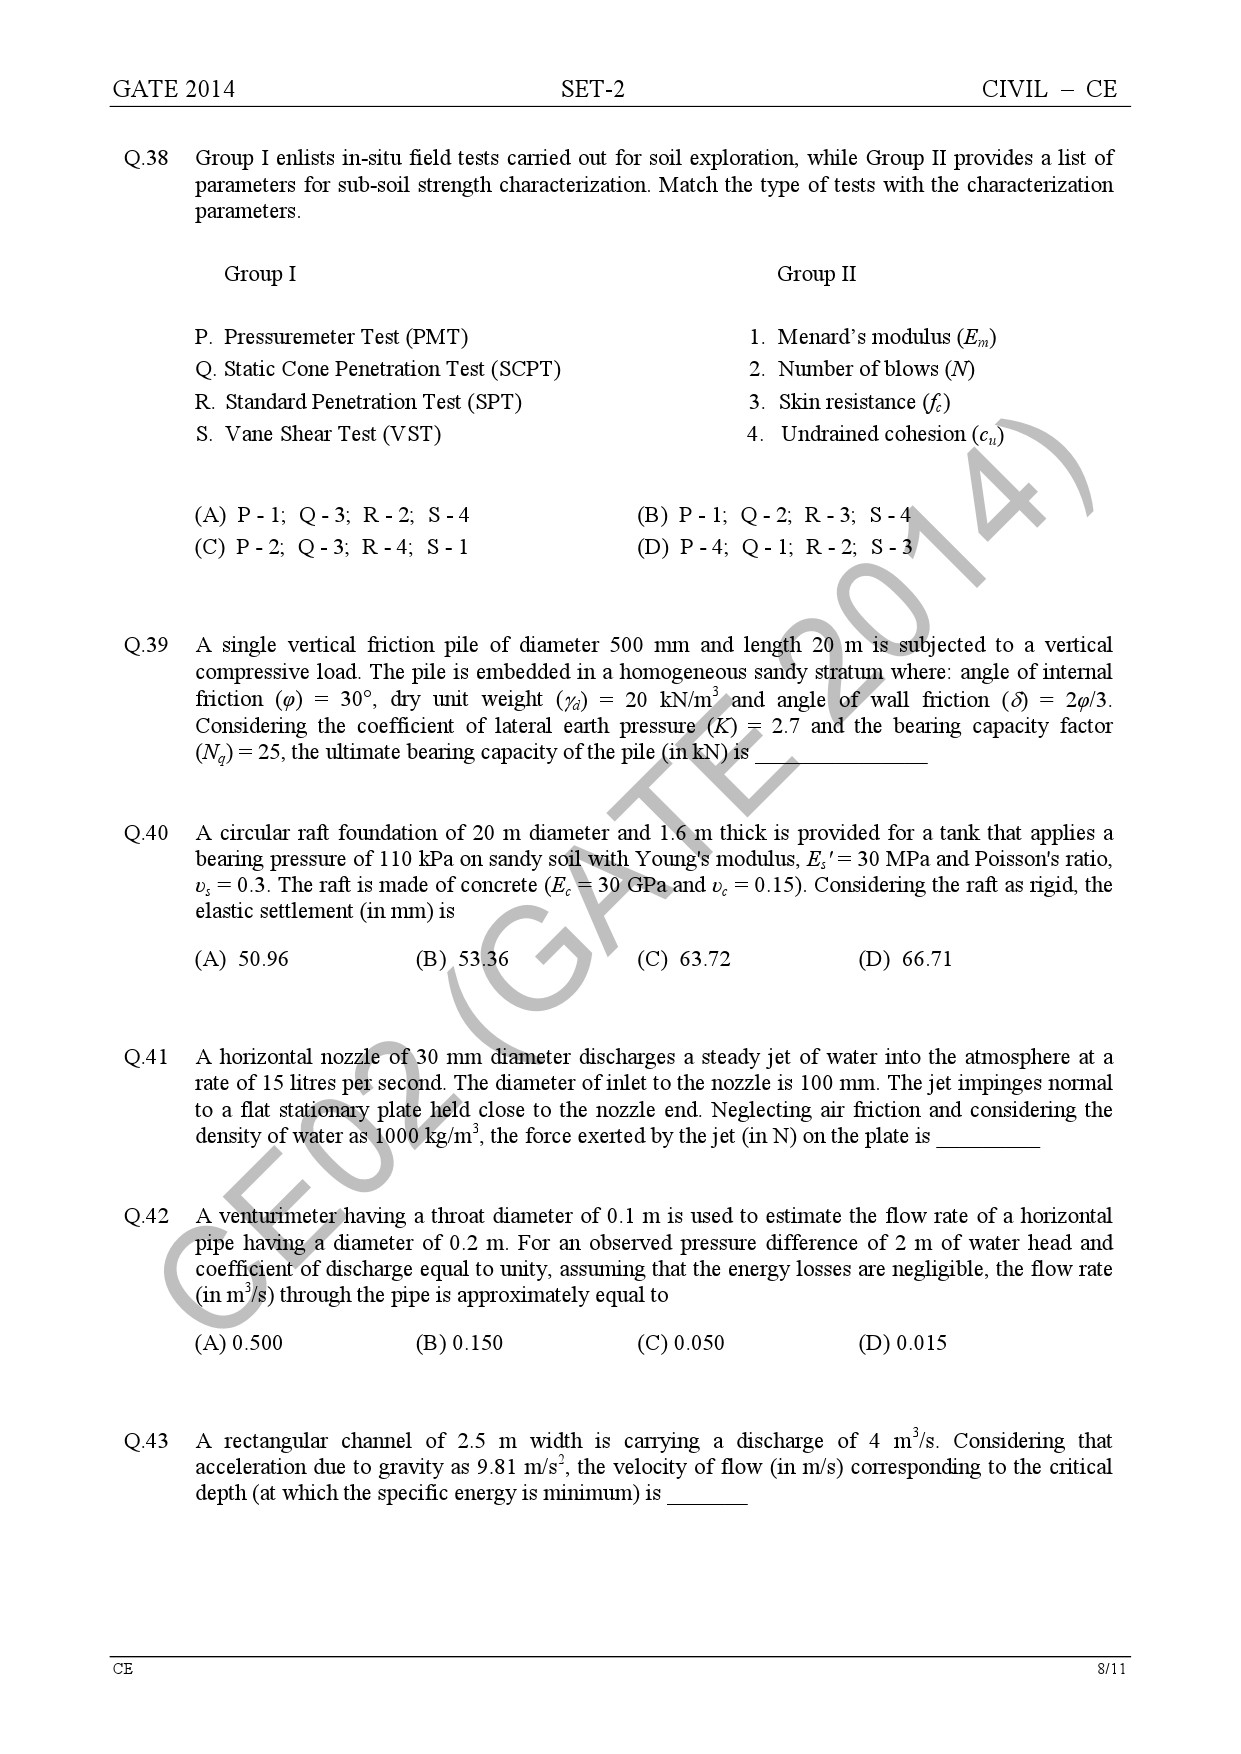 GATE Exam Question Paper 2014 Civil Engineering Set 2 14